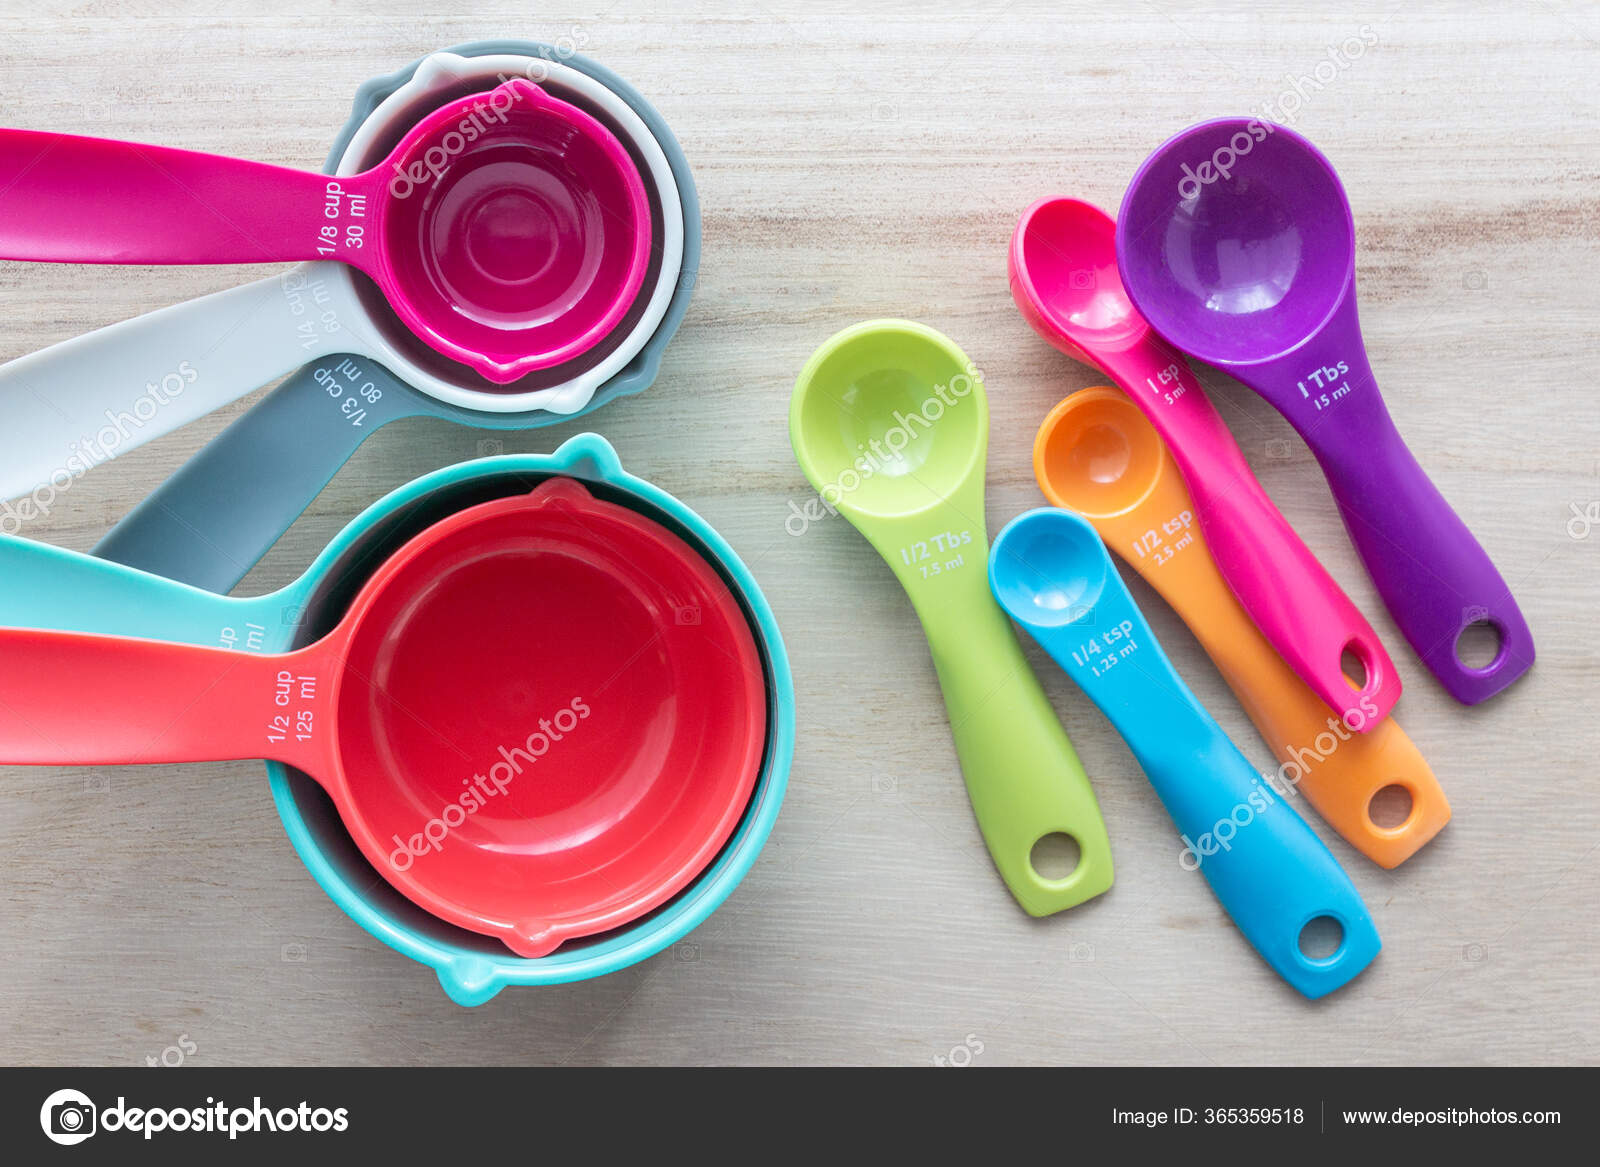 https://st3.depositphotos.com/26484464/36535/i/1600/depositphotos_365359518-stock-photo-set-colorful-measuring-cups-measuring.jpg